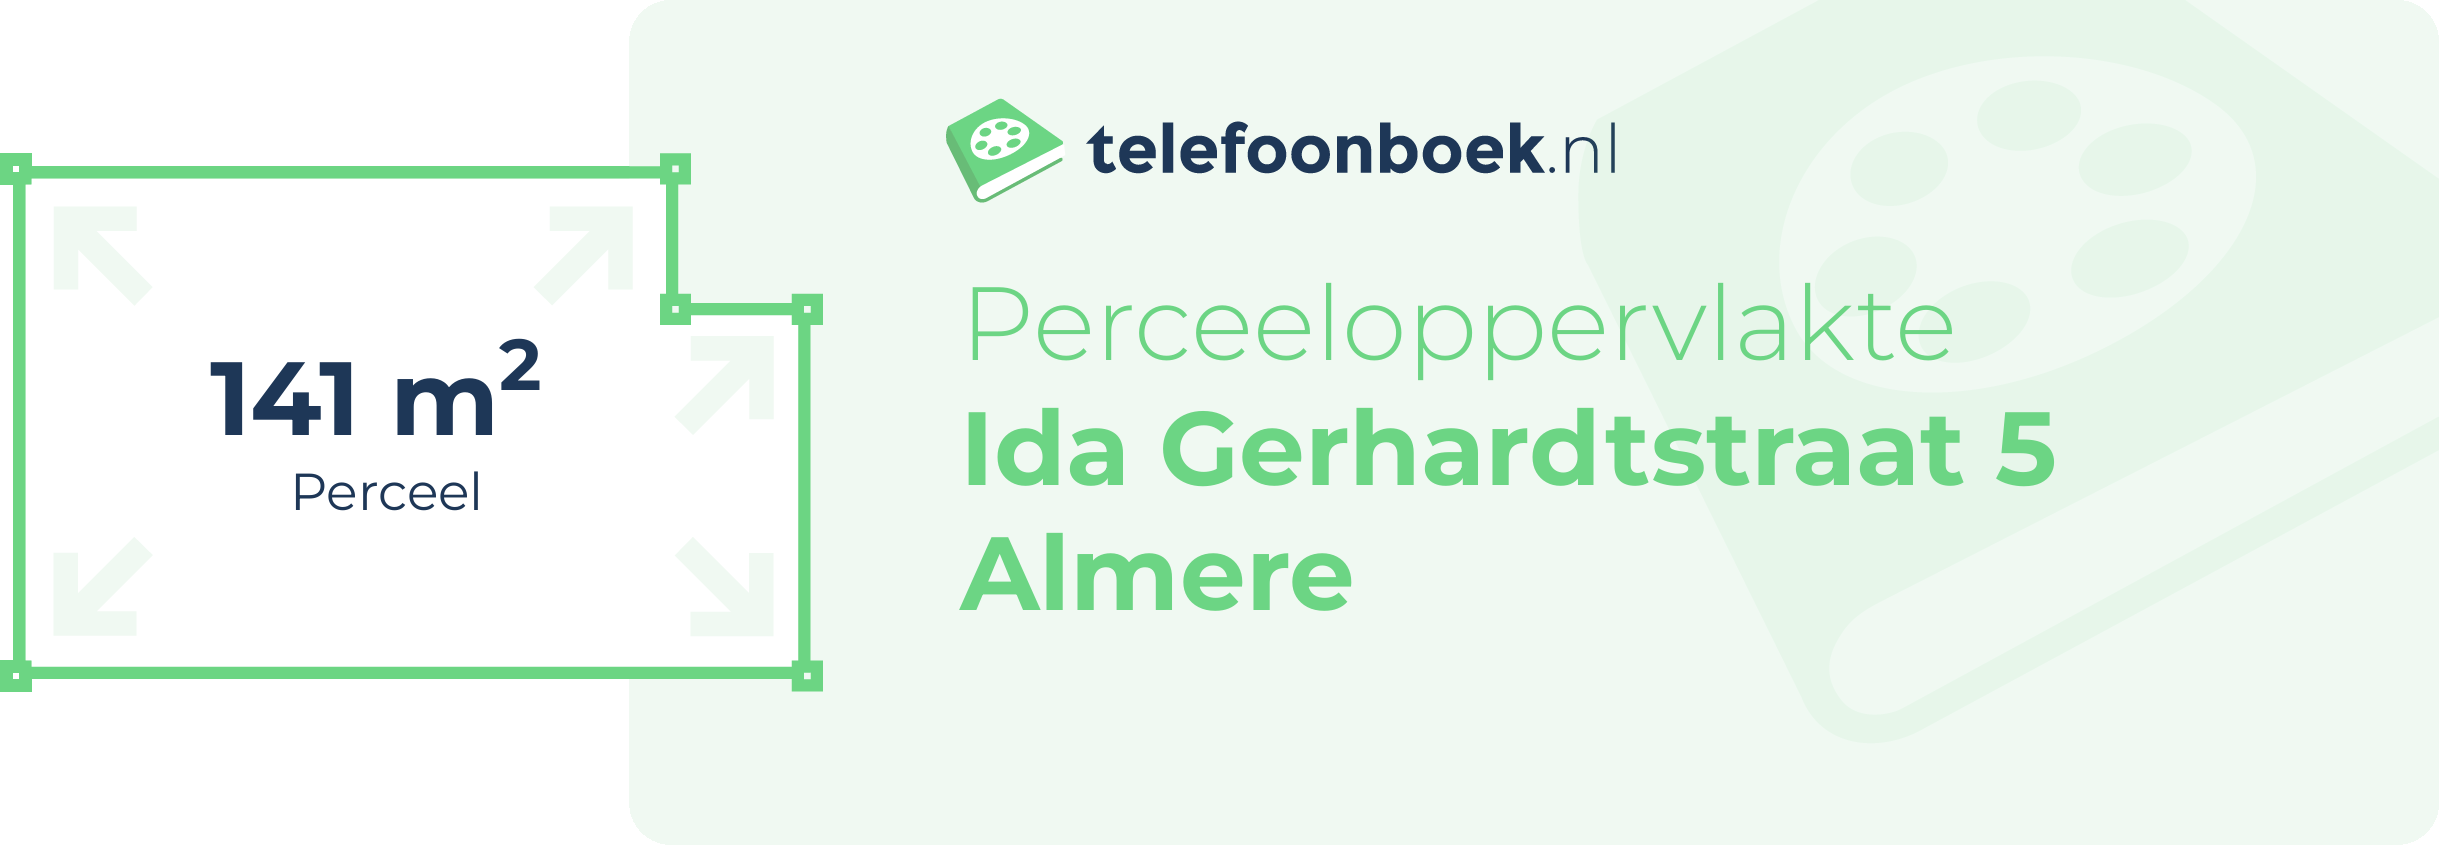 Perceeloppervlakte Ida Gerhardtstraat 5 Almere